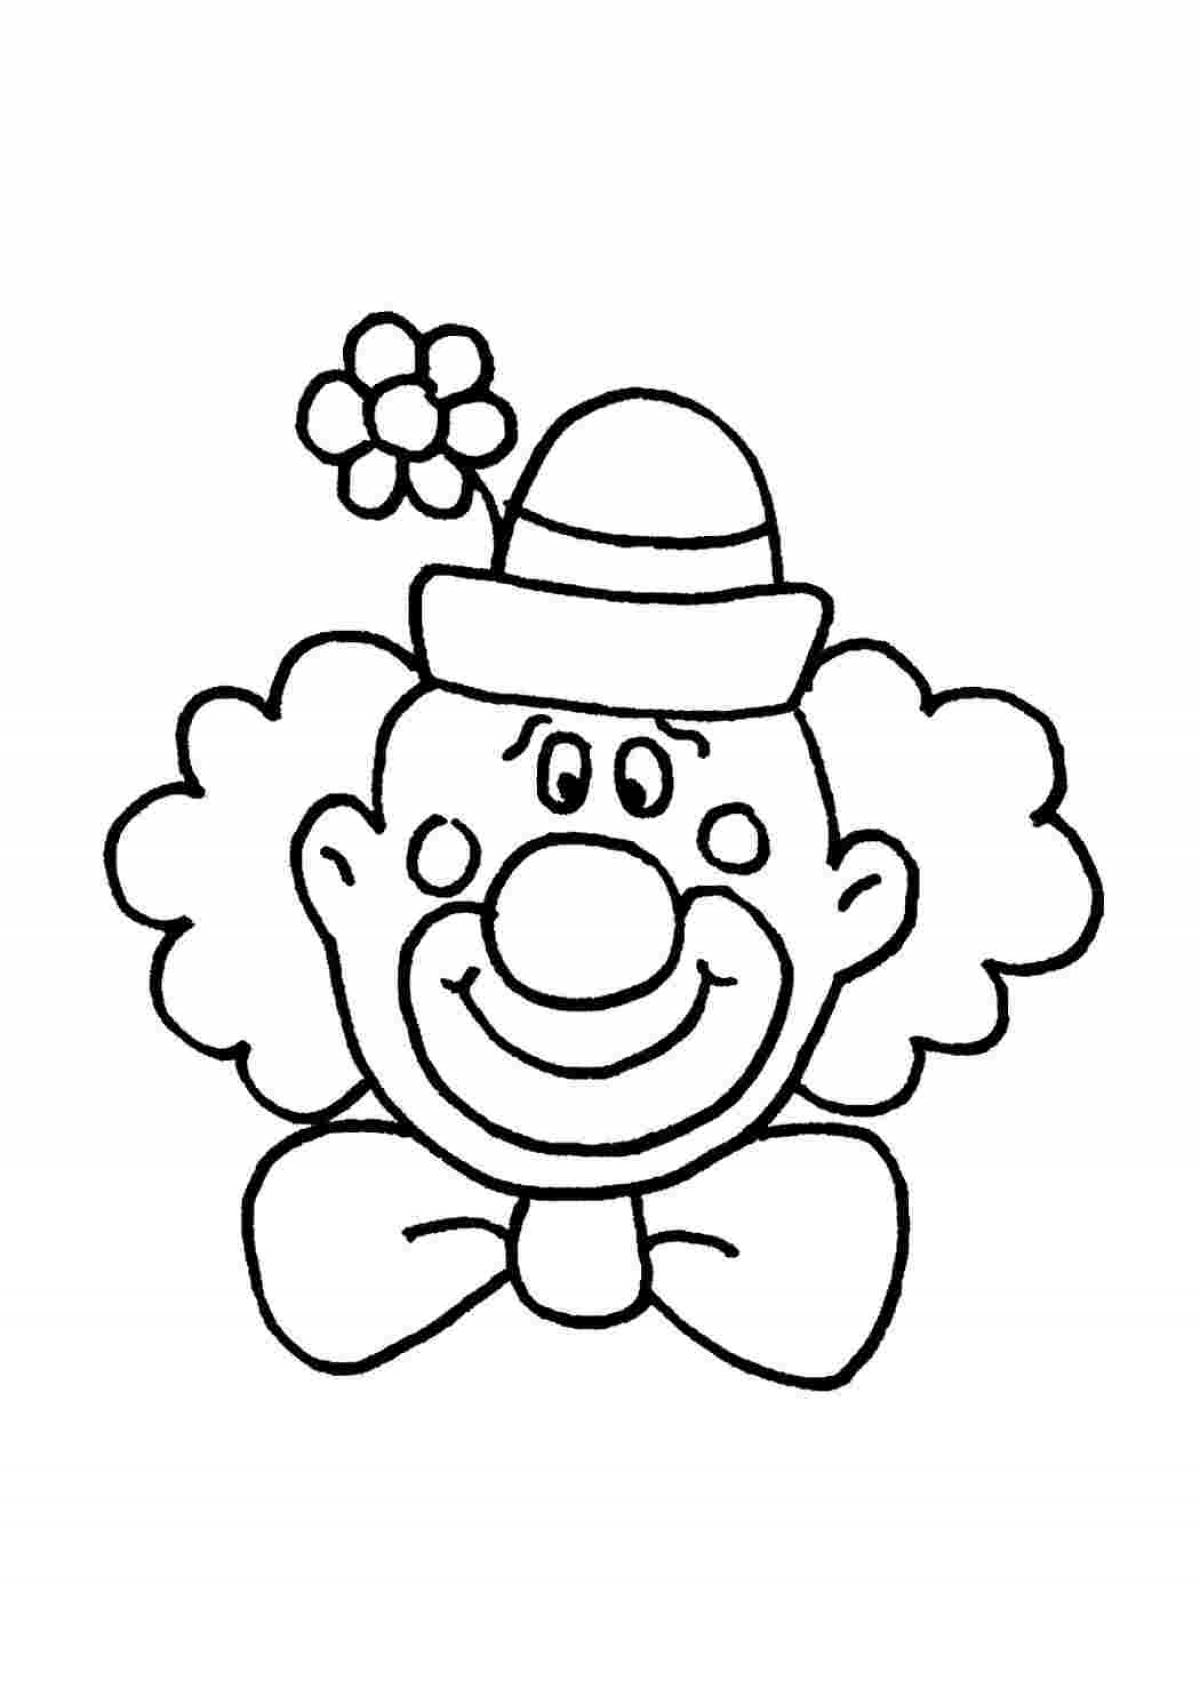 Раскраска клоун для детей 3 4 лет. Клоун раскраска. Клоун раскраска для малышей. Клоун раскраска для детей. Клоун для раскрашивания детям.